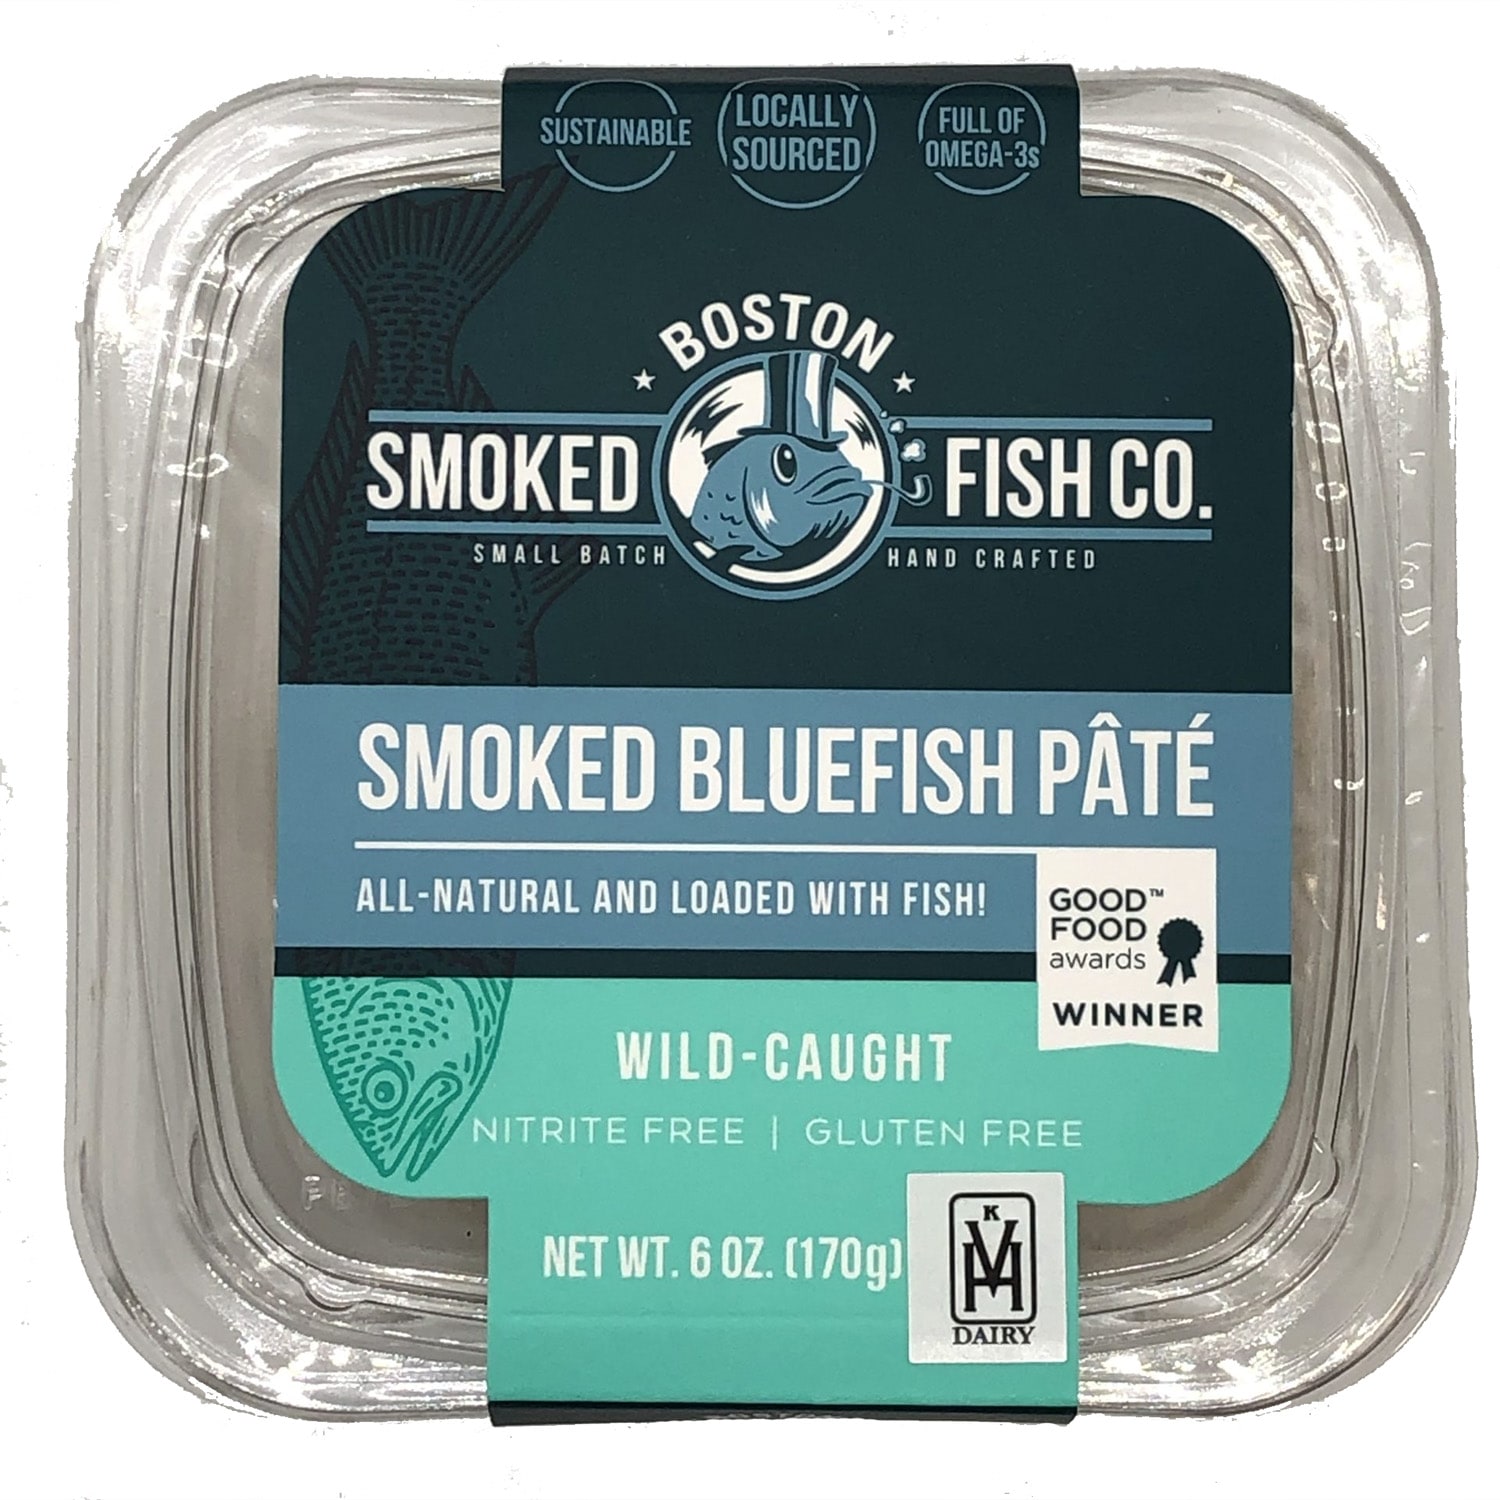 Boston Smoked Fish Co Smoked Bluefish Pate